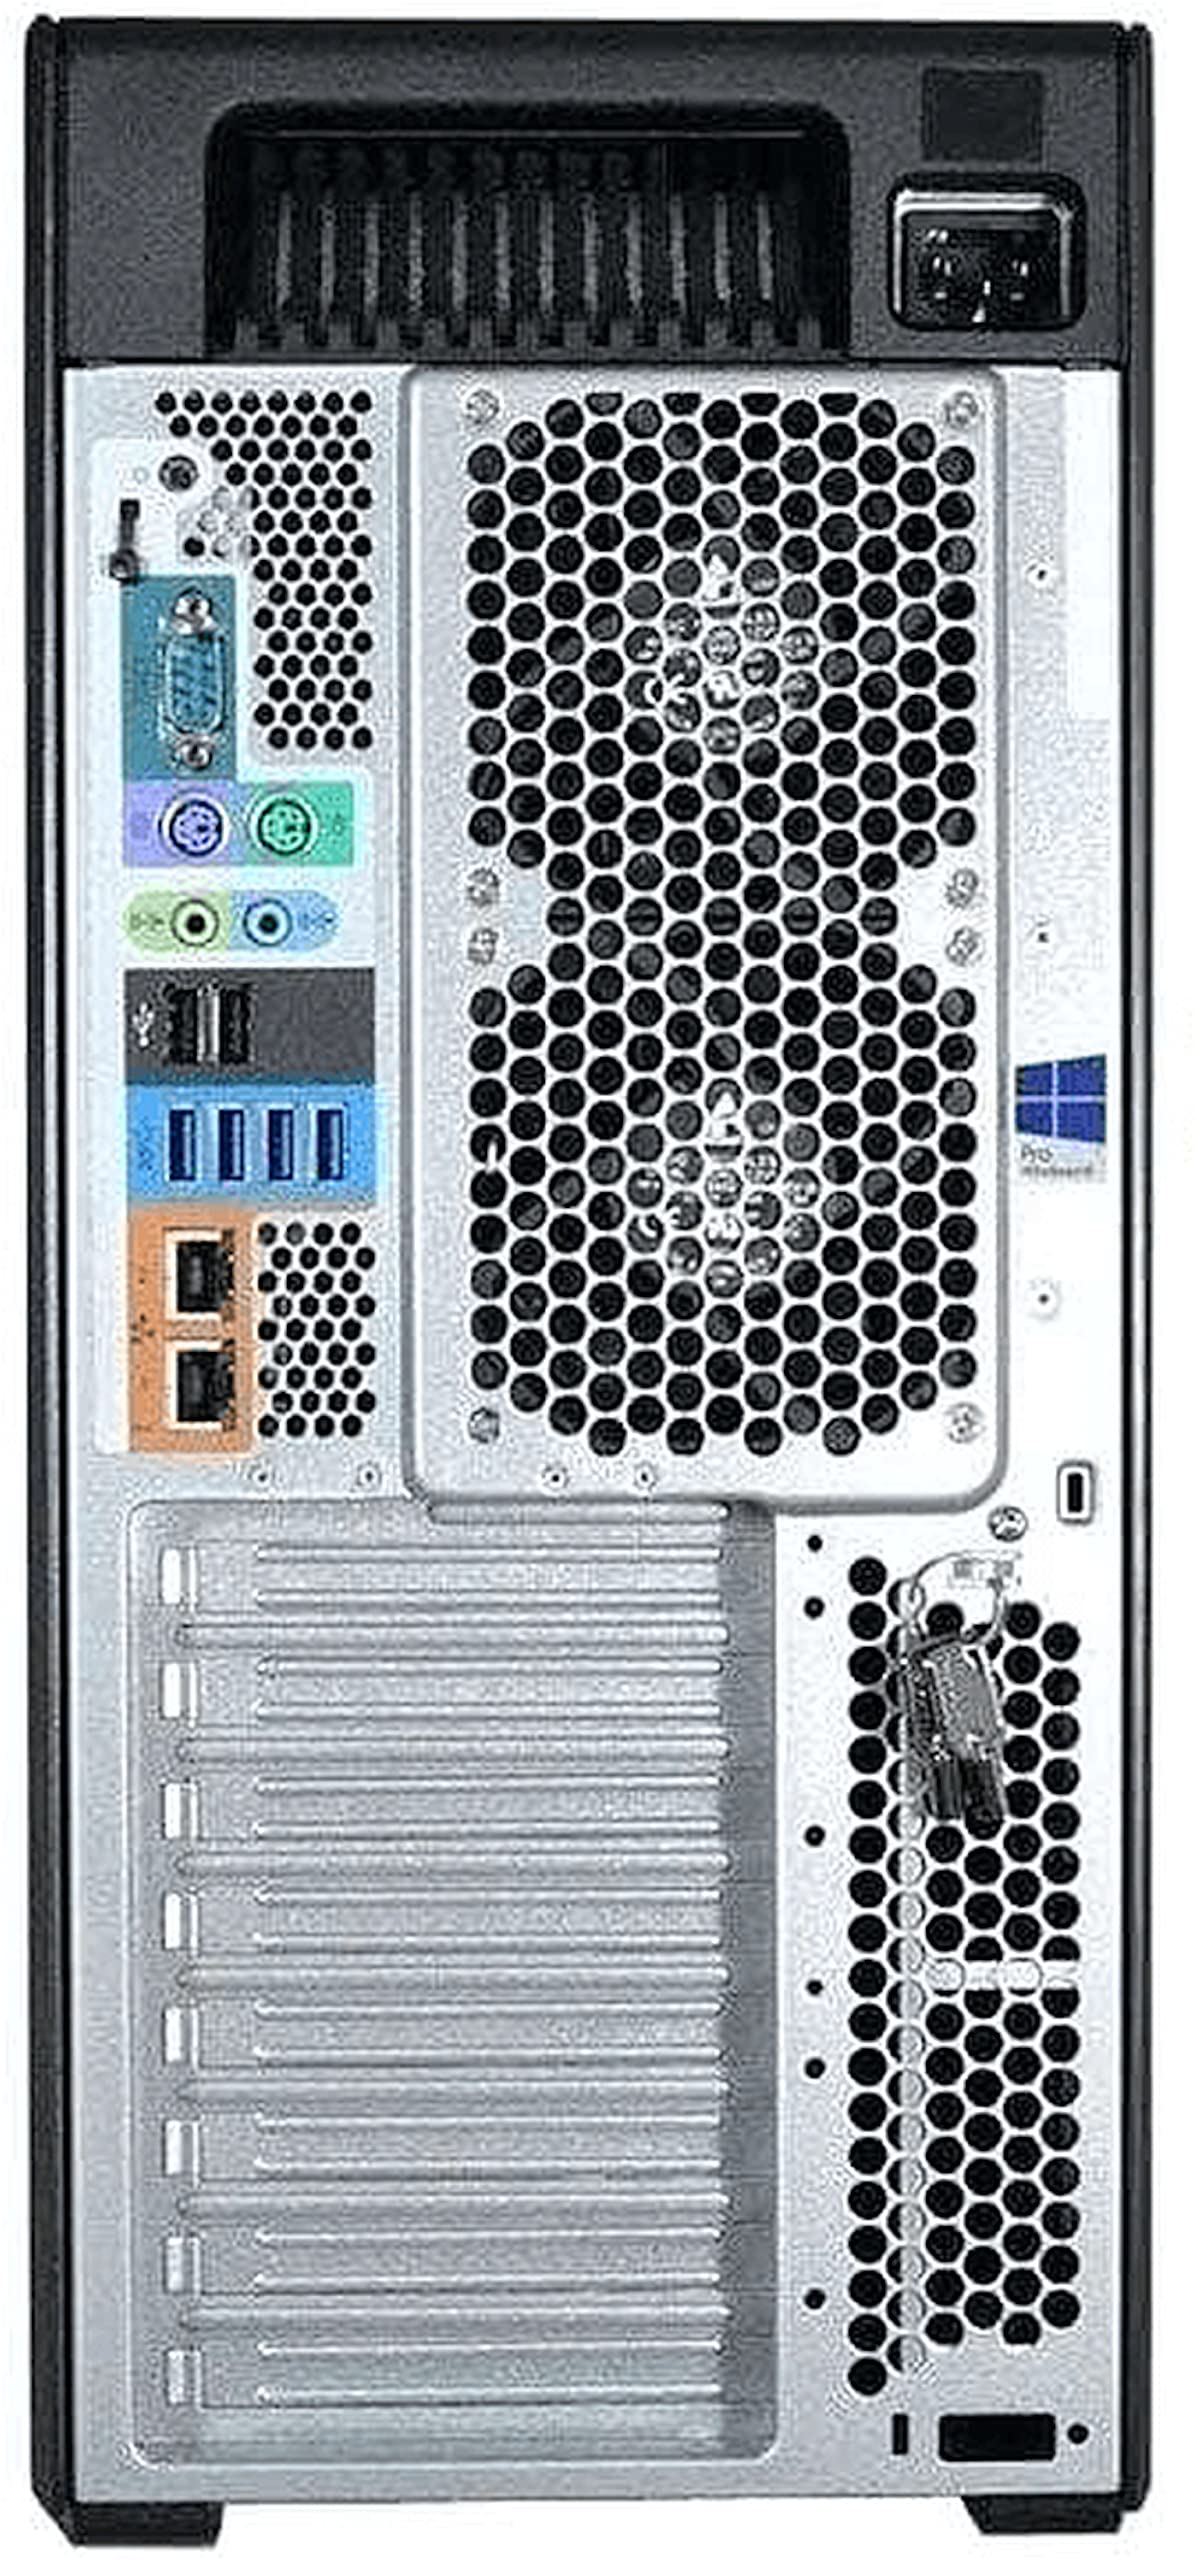 HP Z840 Workstation, 2X Intel Xeon E5-2678 v3 up to 3.1GHz (24 Cores Total), 128GB DDR4, 4X 1TB SSD, Quadro M4000 8GB (4X Display Ports), USB 3.0, Windows 10 Professional 64-bit (Renewed)